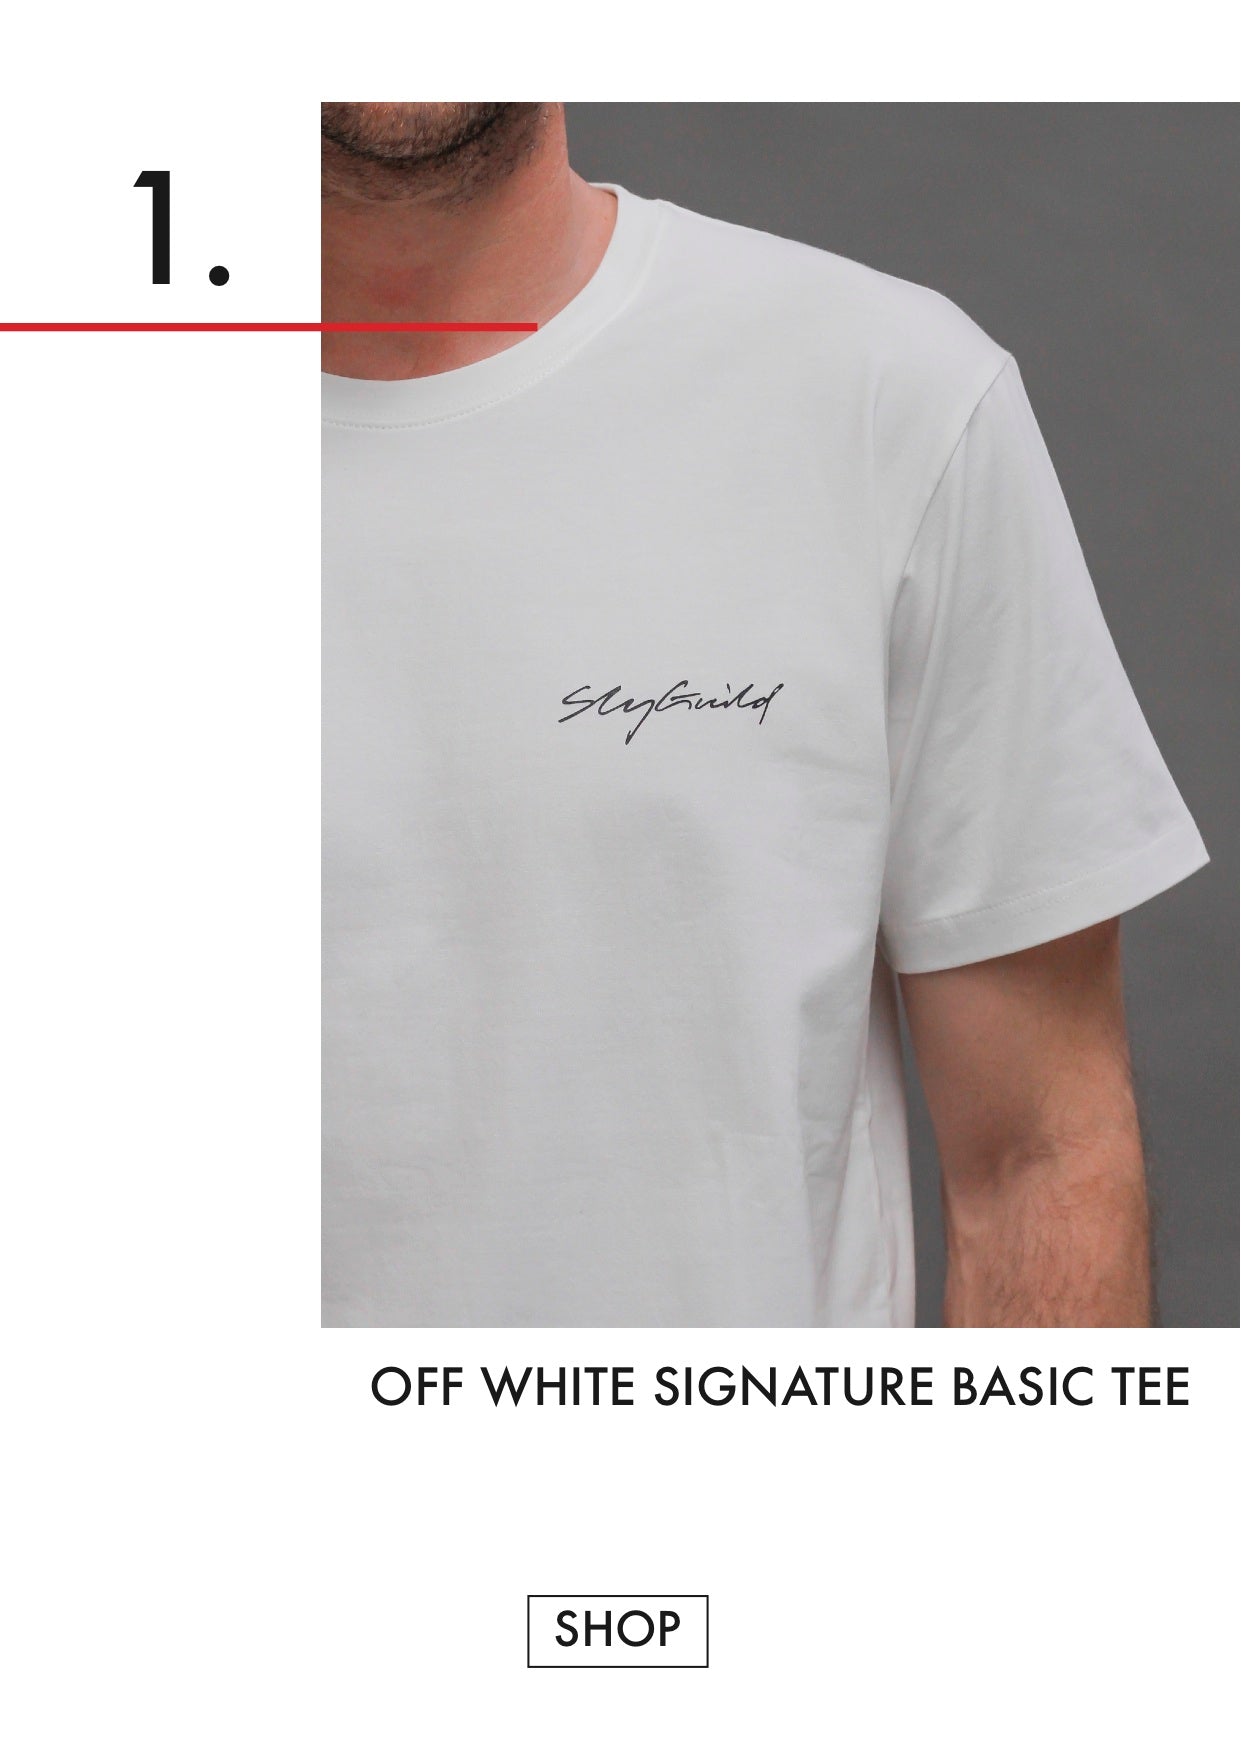 White signature tshirt